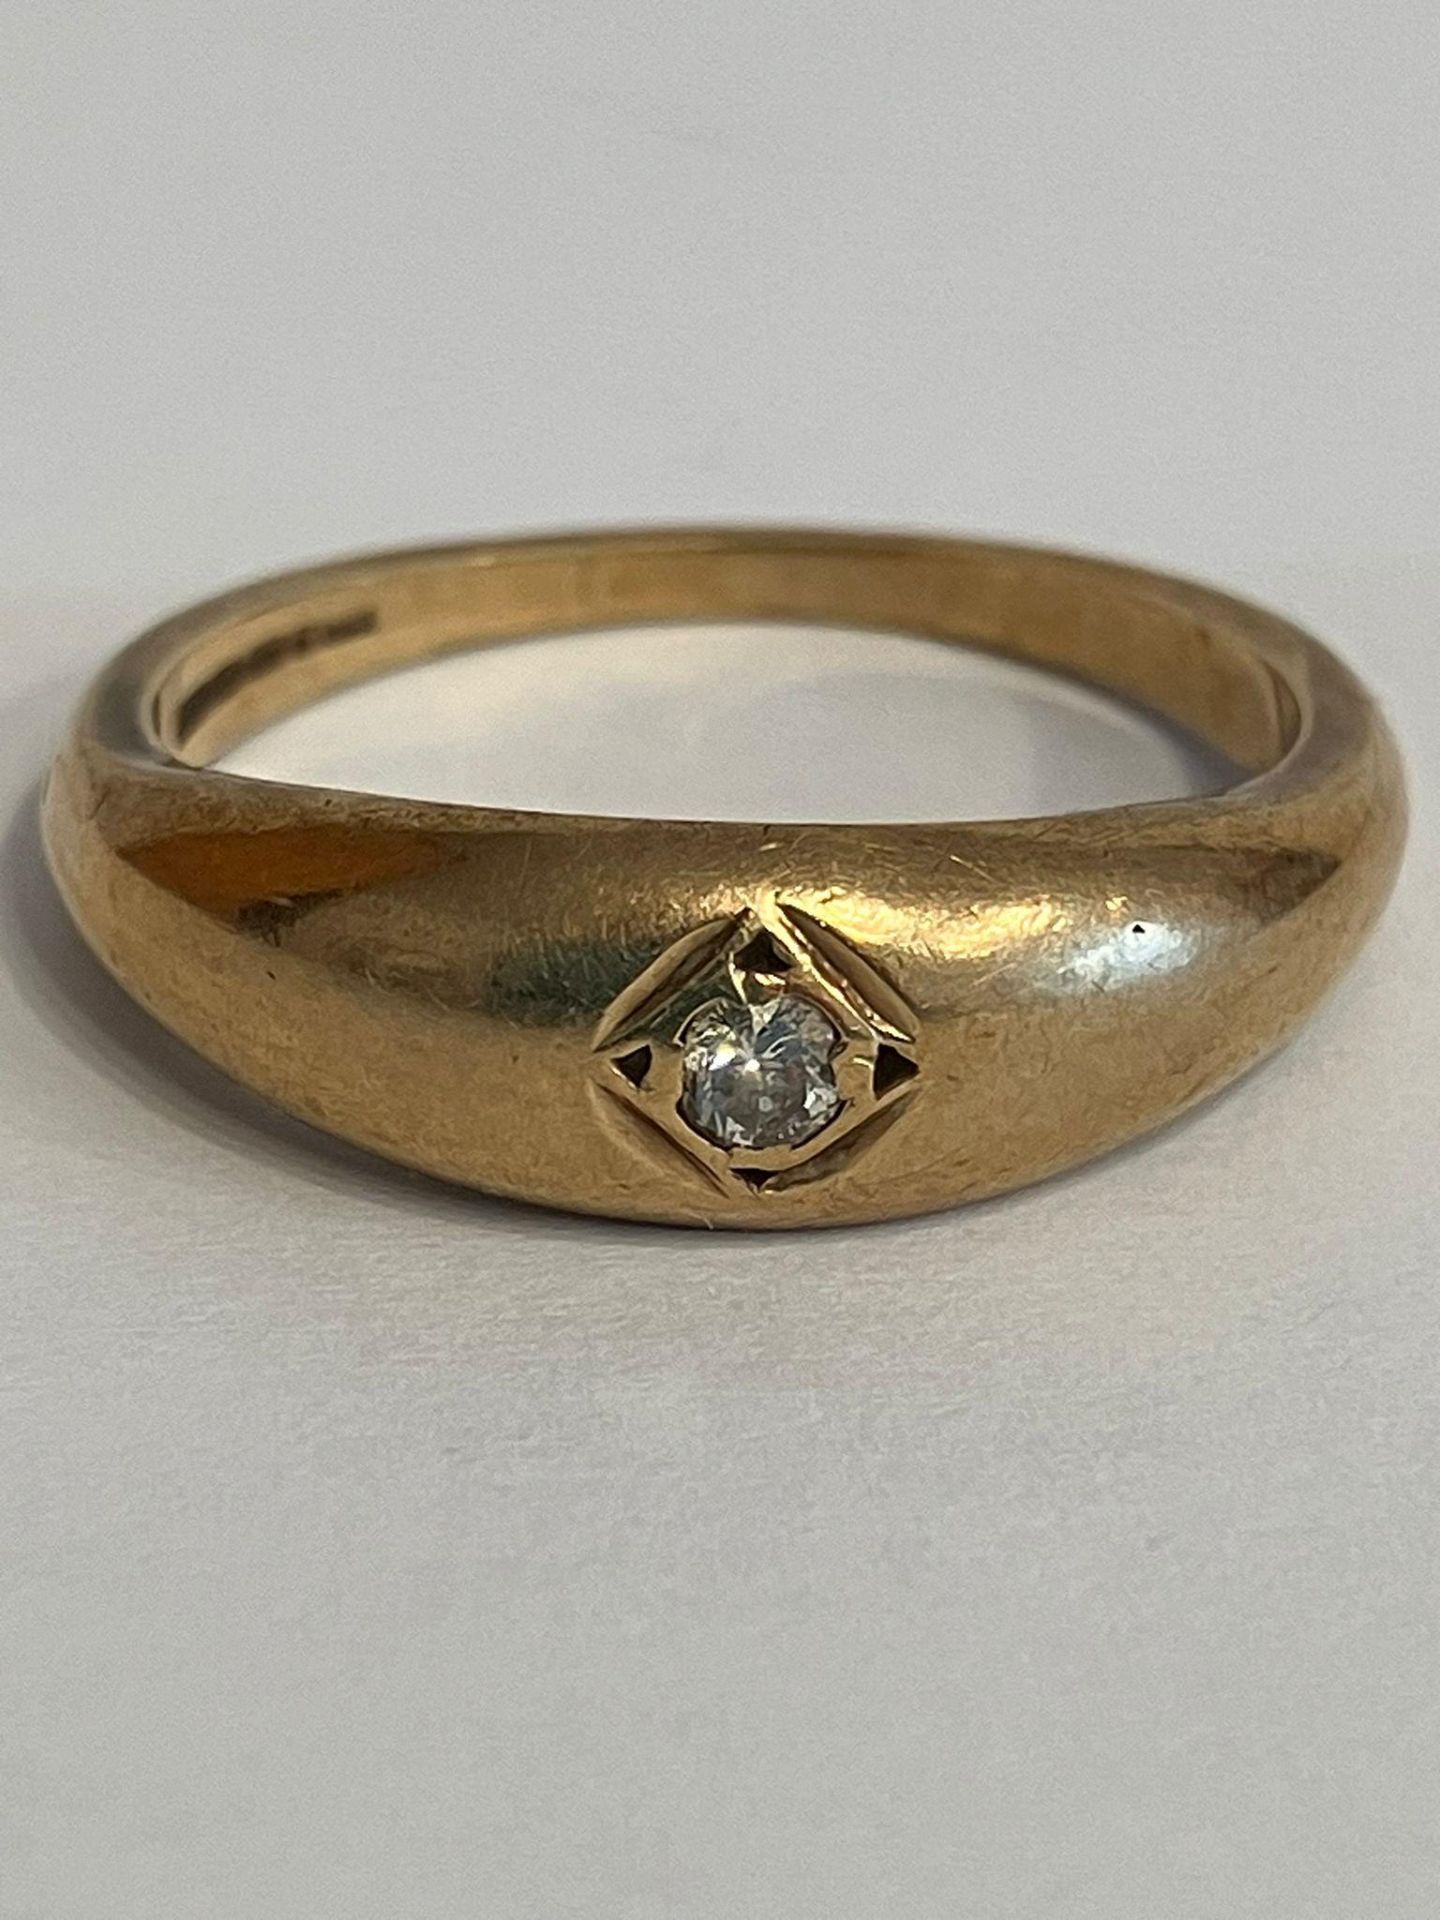 Vintage 9 carat GOLD and DIAMOND GYPSY RING. Full UK hallmark. 4 grams. Size R.